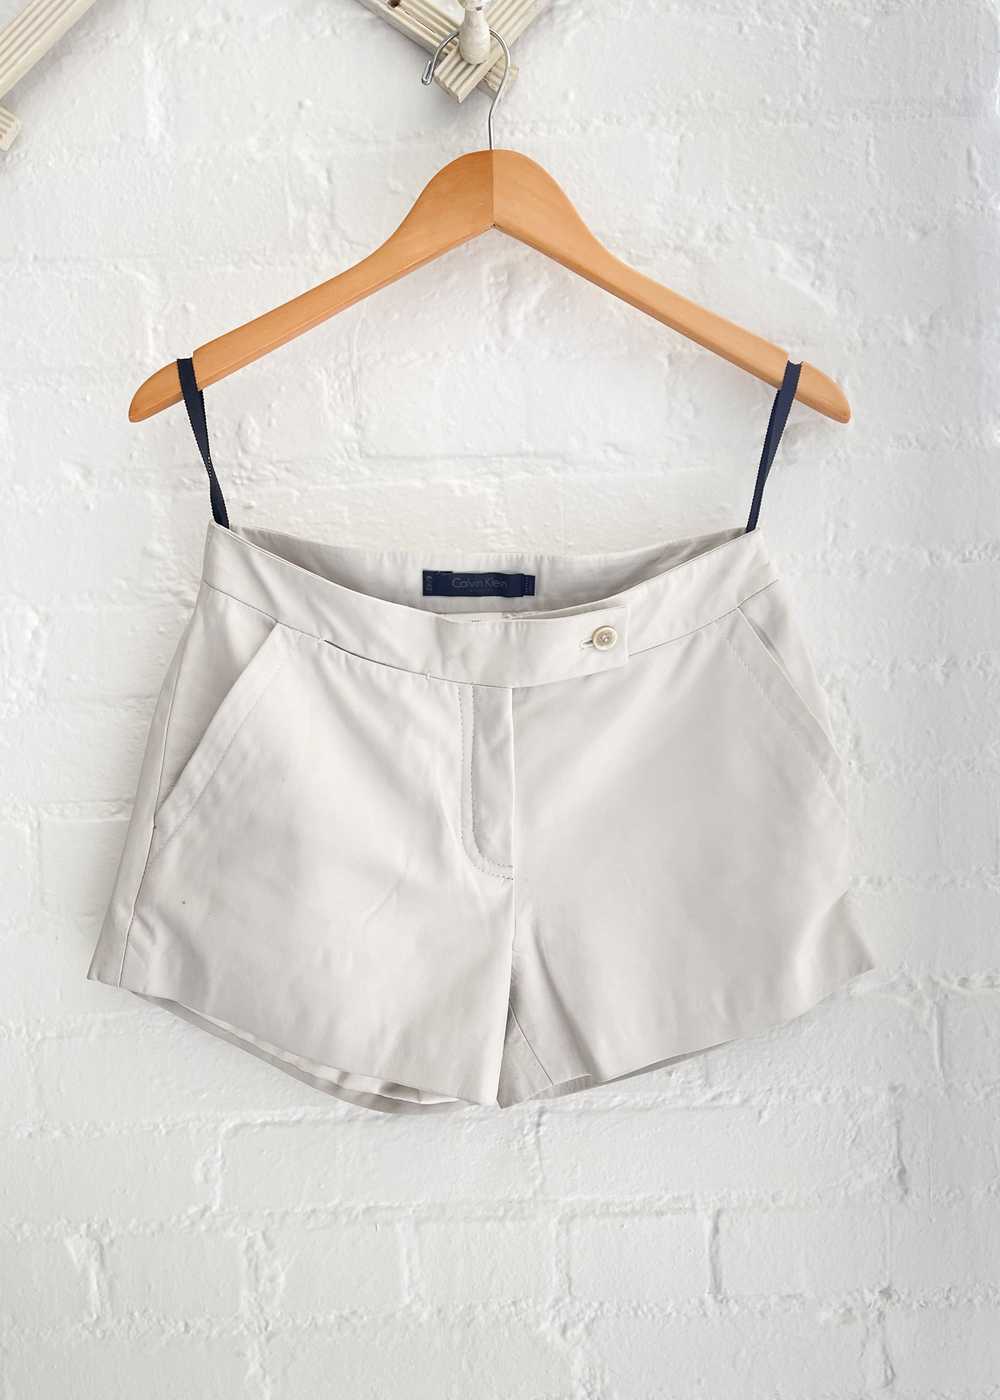 Vintage Calvin Klein Leather Shorts - image 2